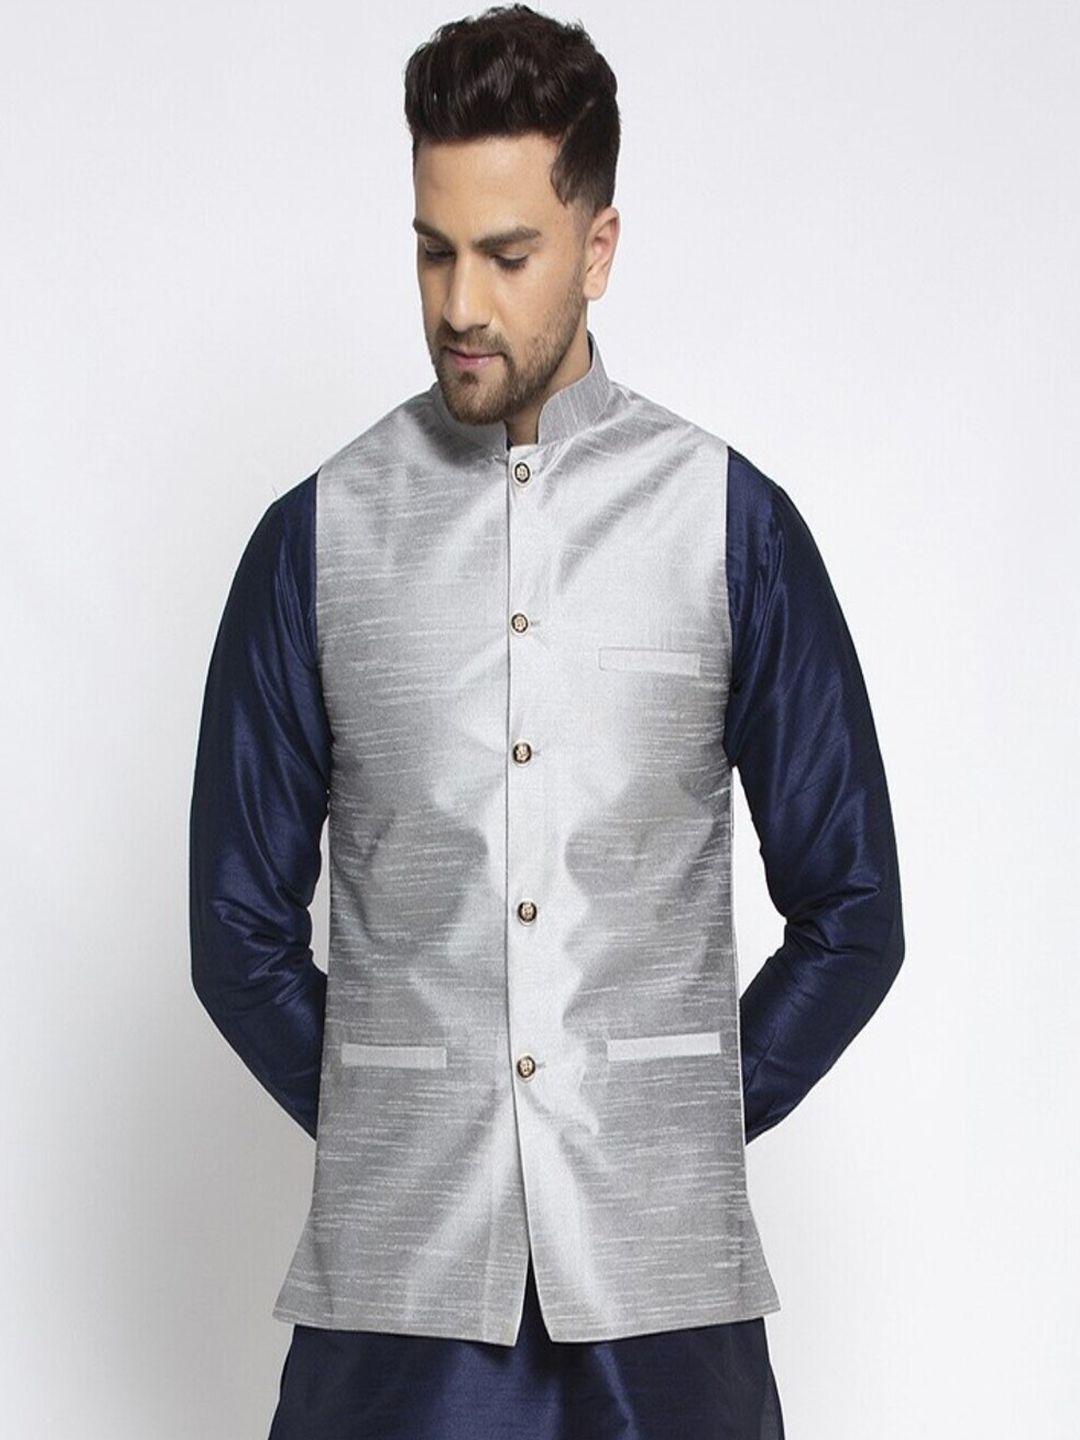 kaifoo men silver-colored solid woven nehru jacket